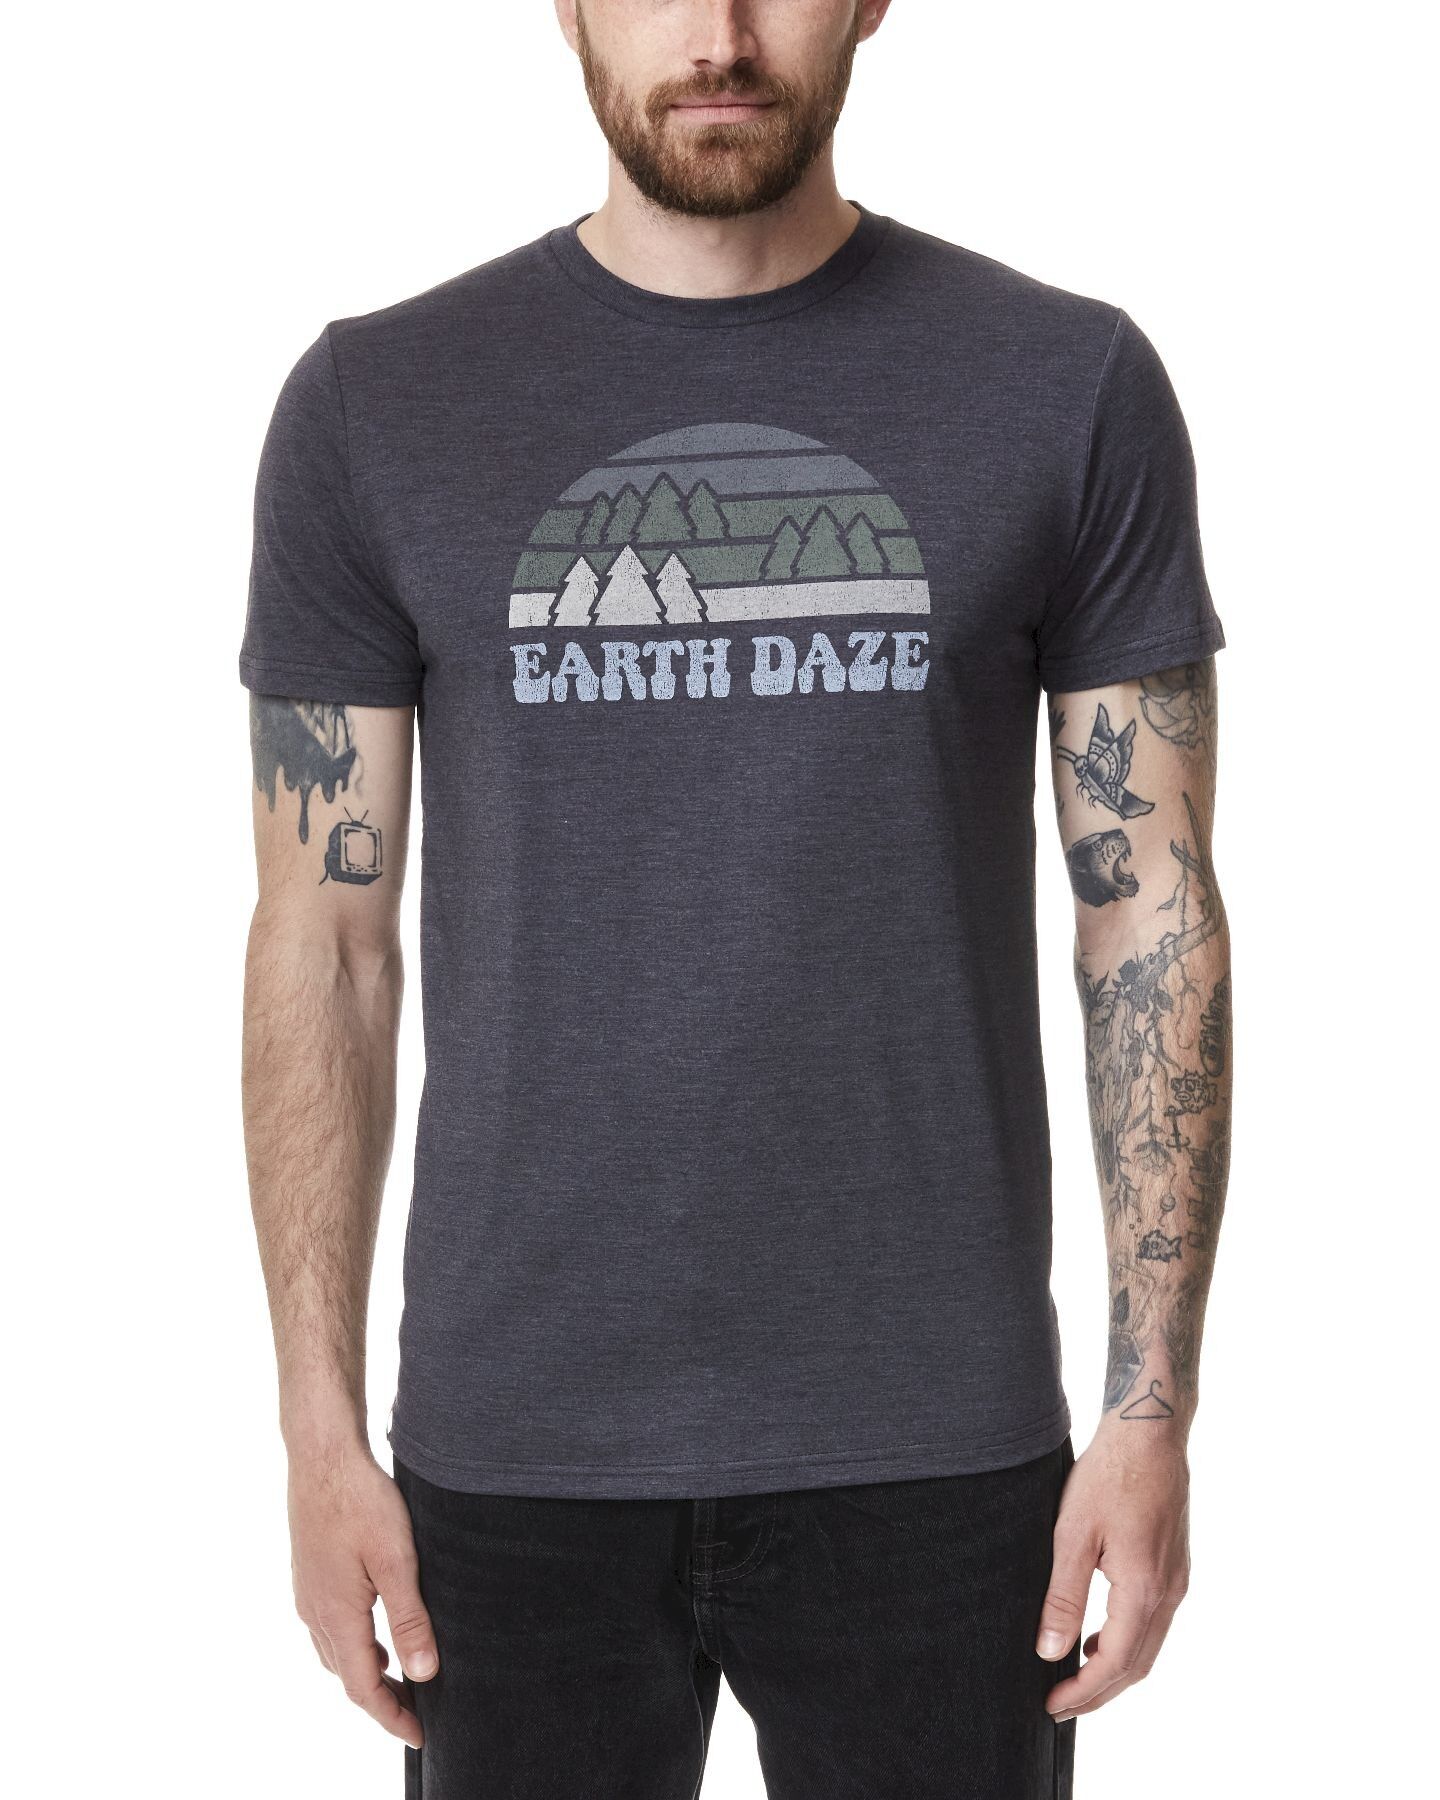 Tentree Earth Daze - T-shirt - Men's